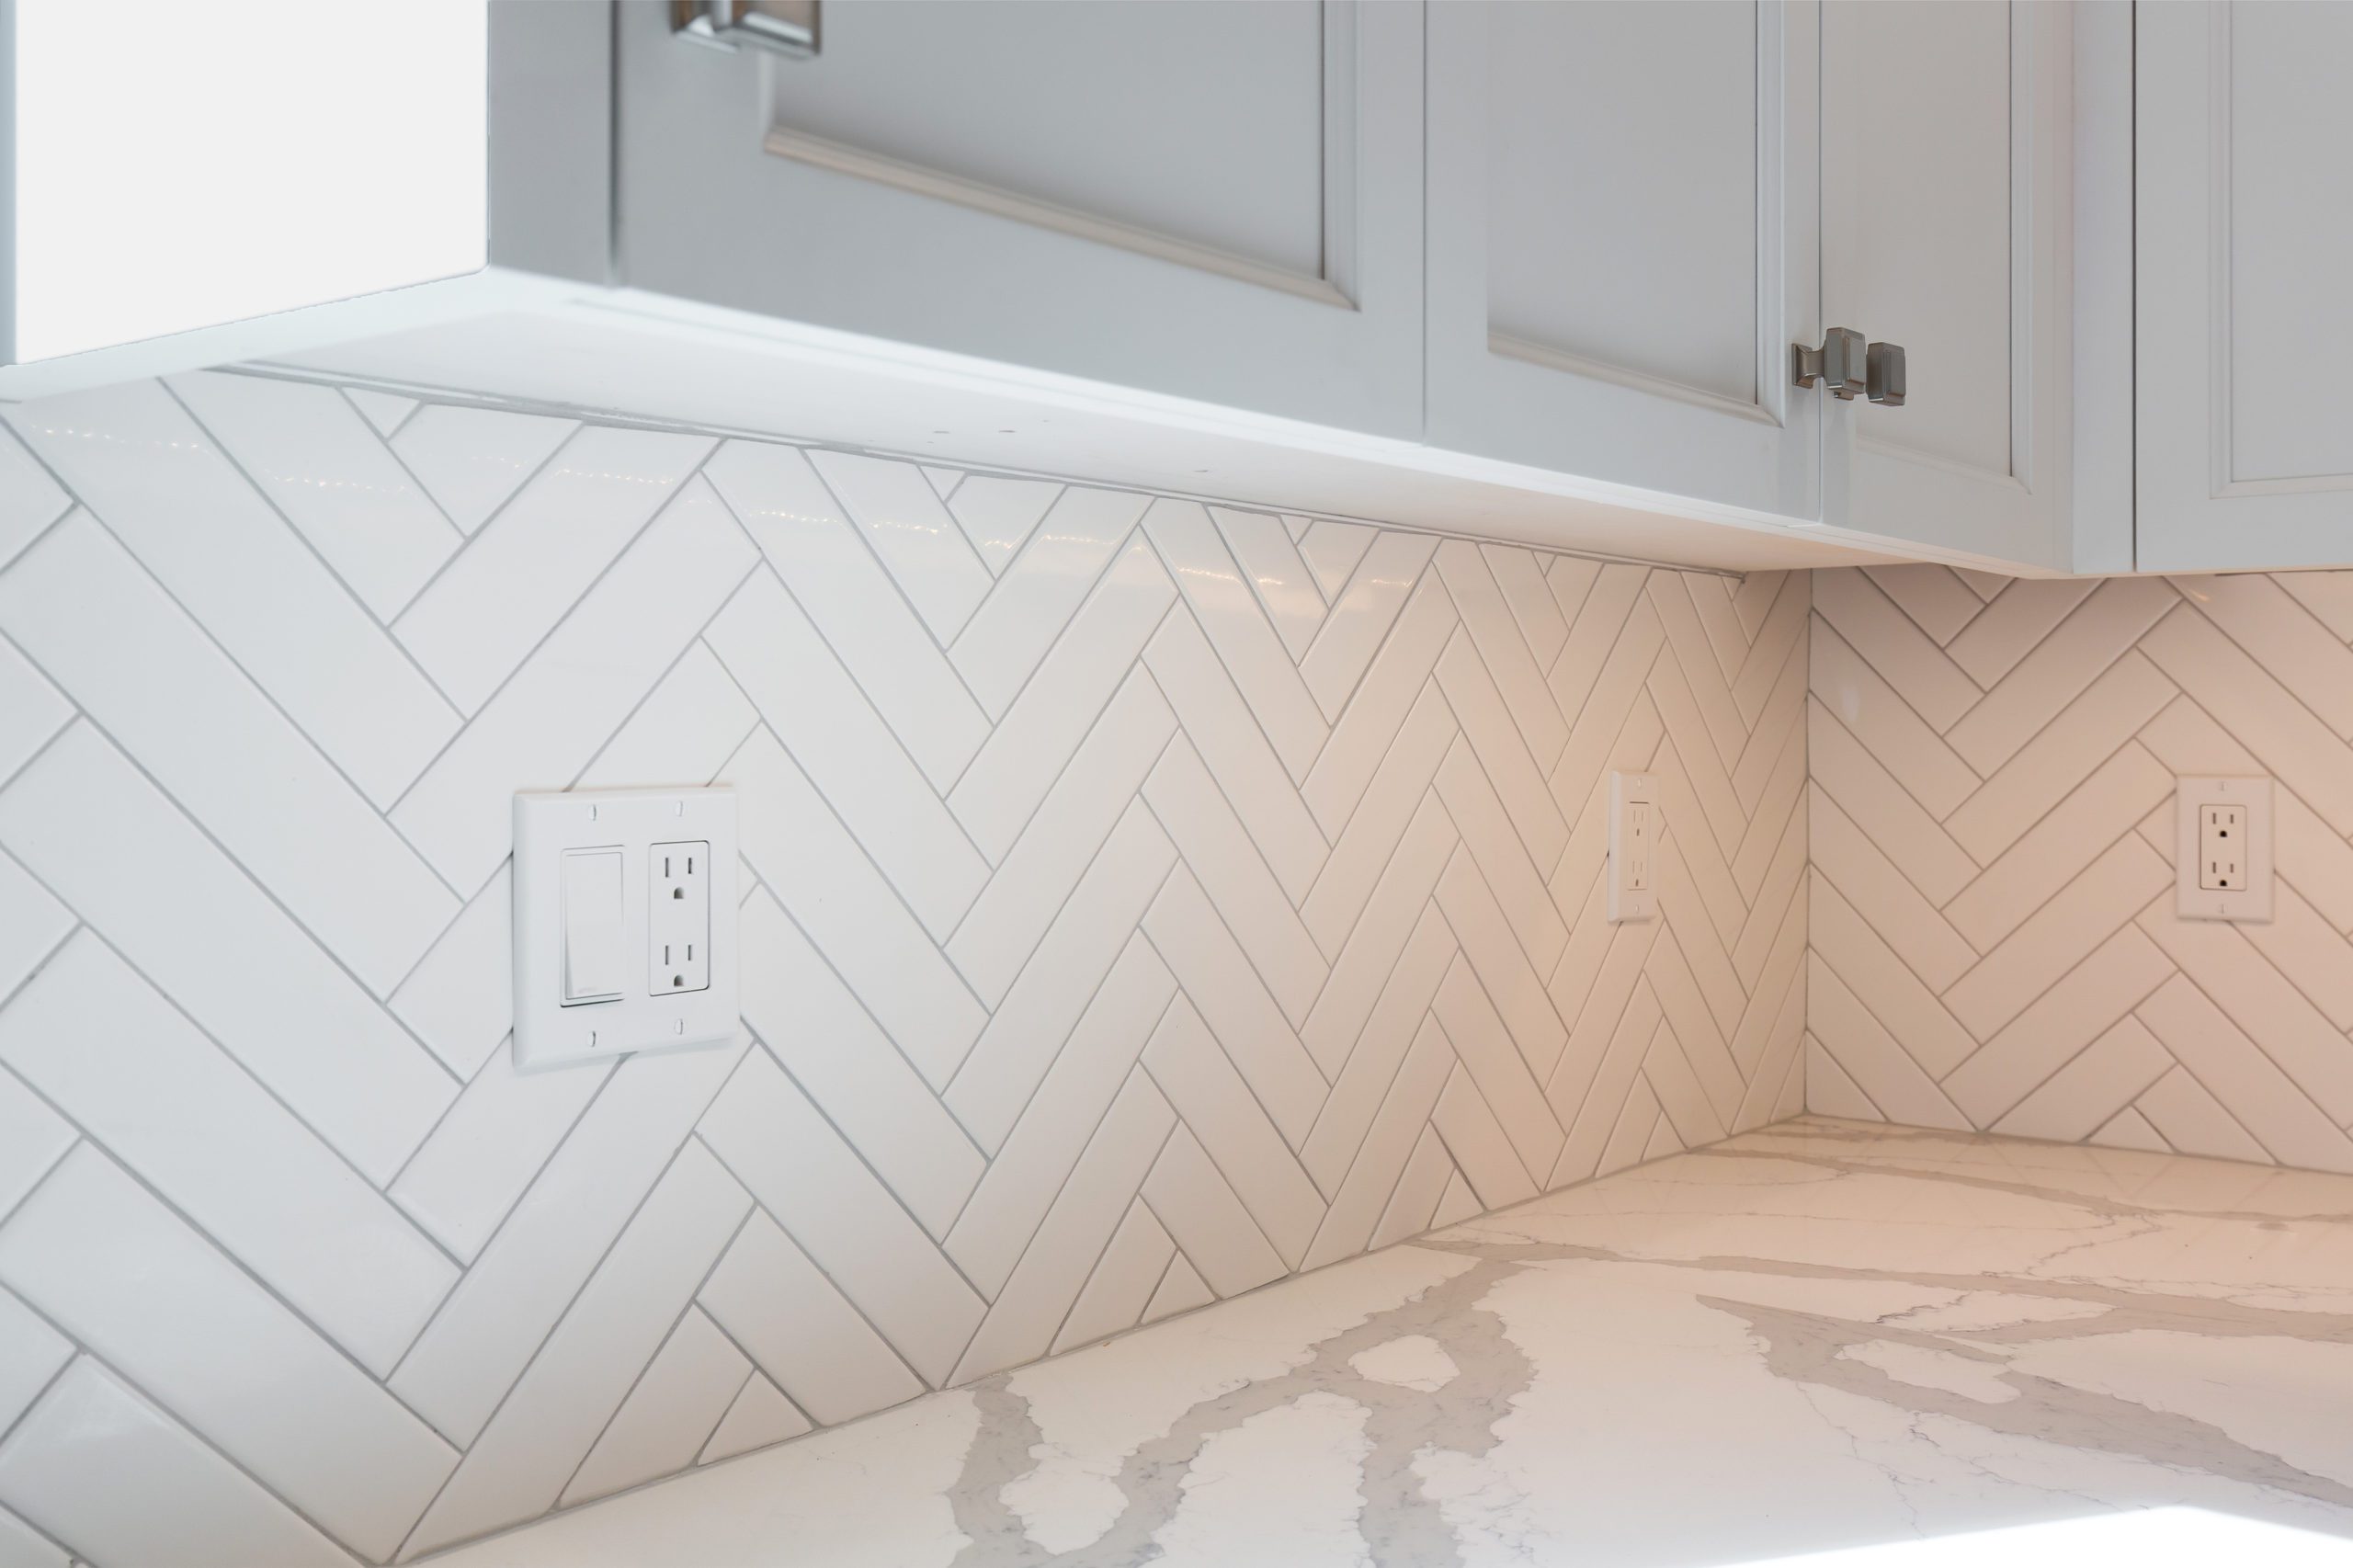 White chevron style backsplash kitchen tile